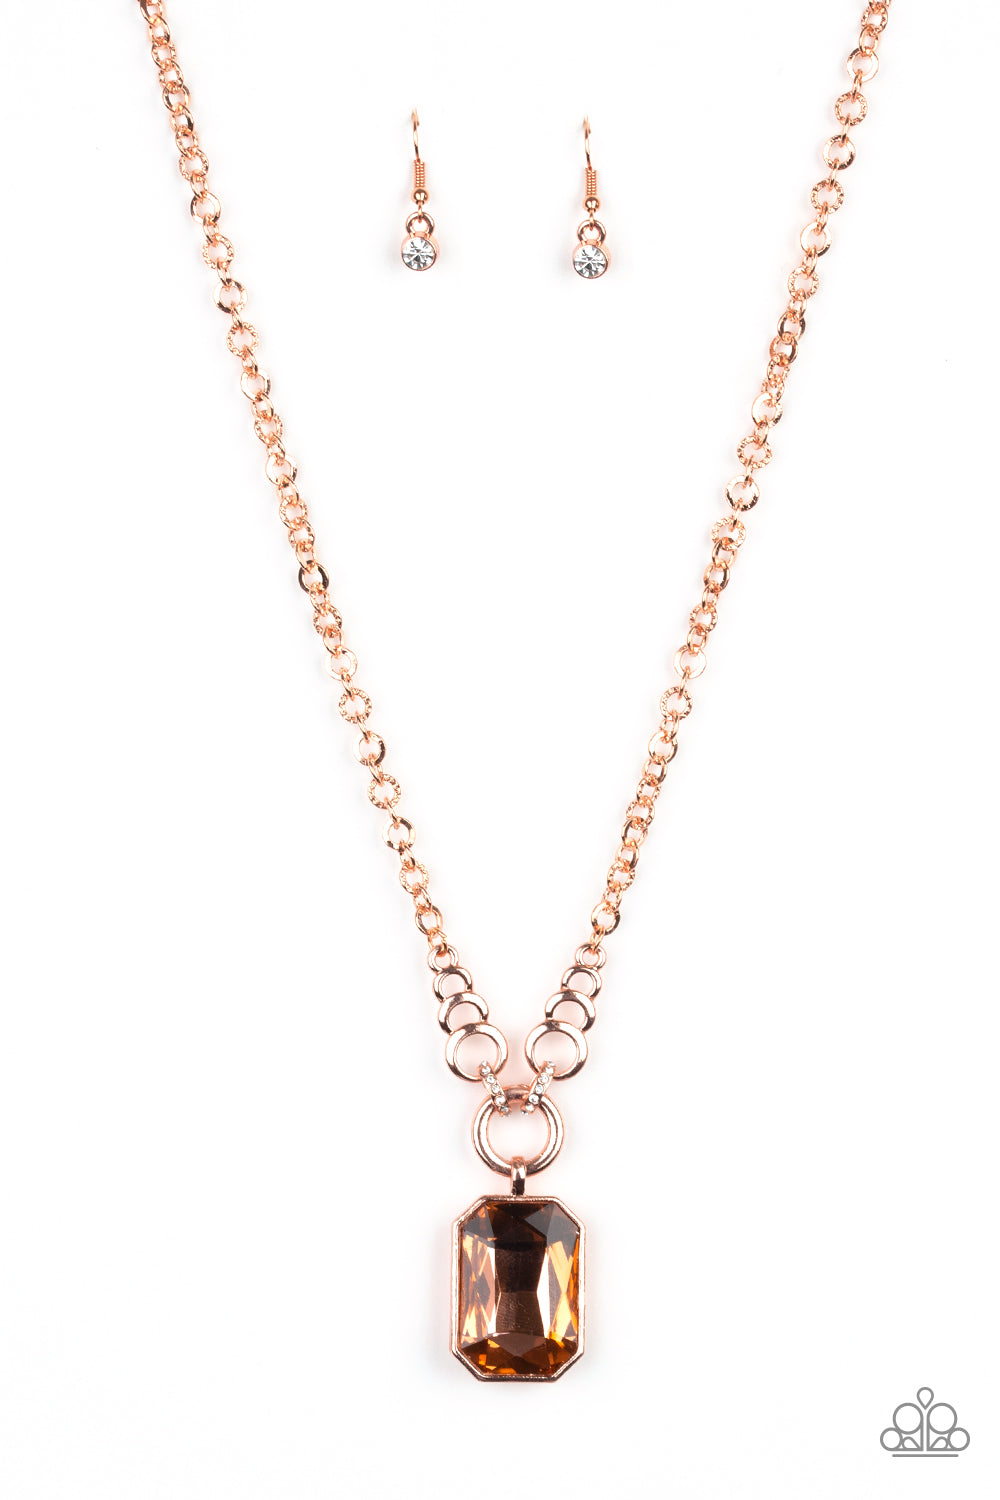 Paparazzi Necklaces - Queen Bling - Copper